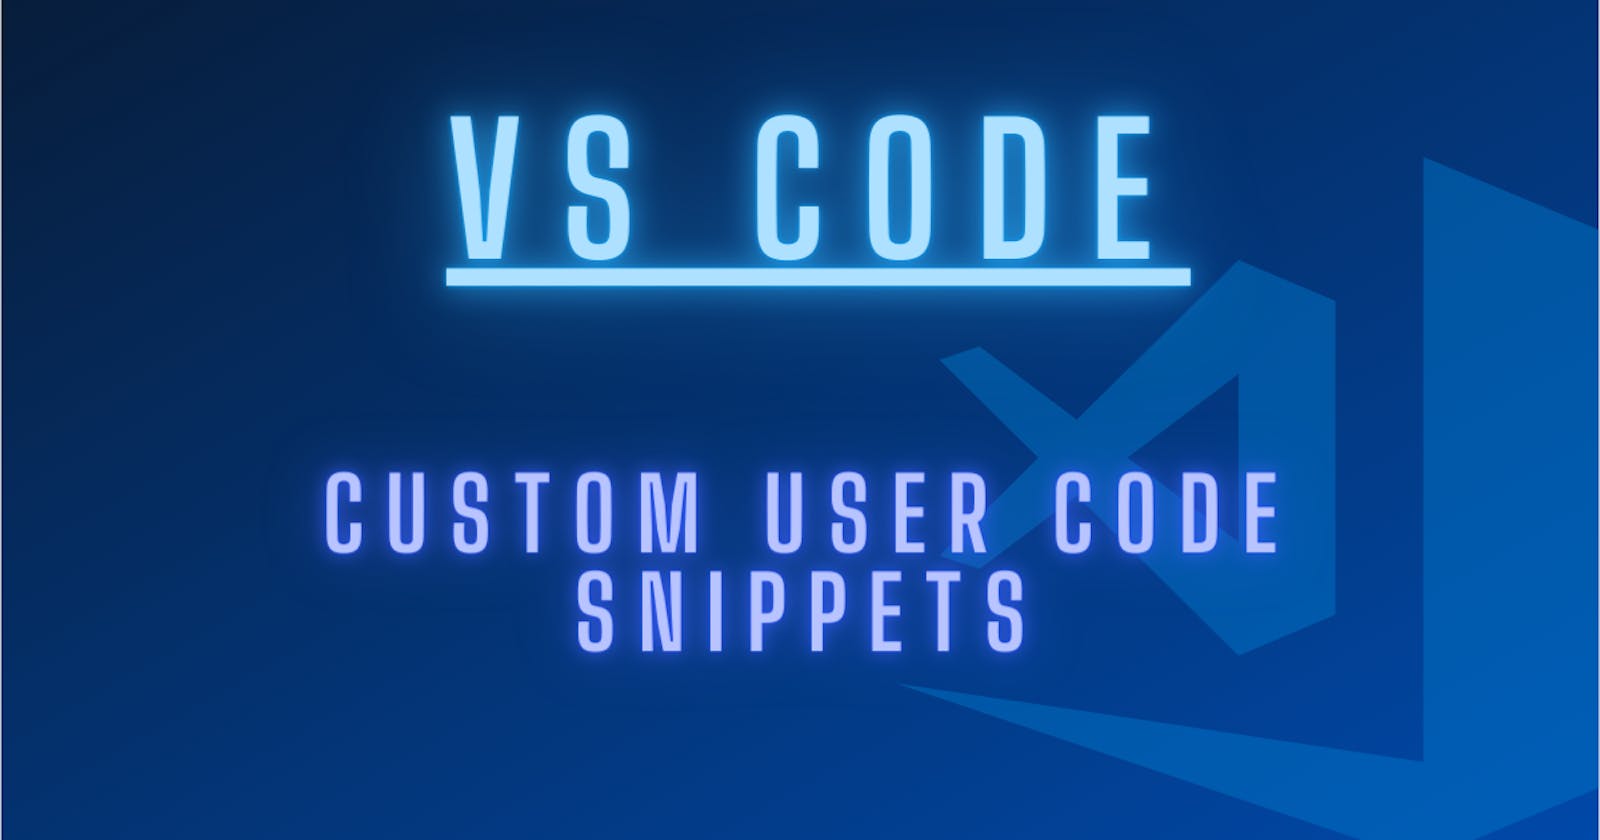 How to create custom code snippets in VS Code